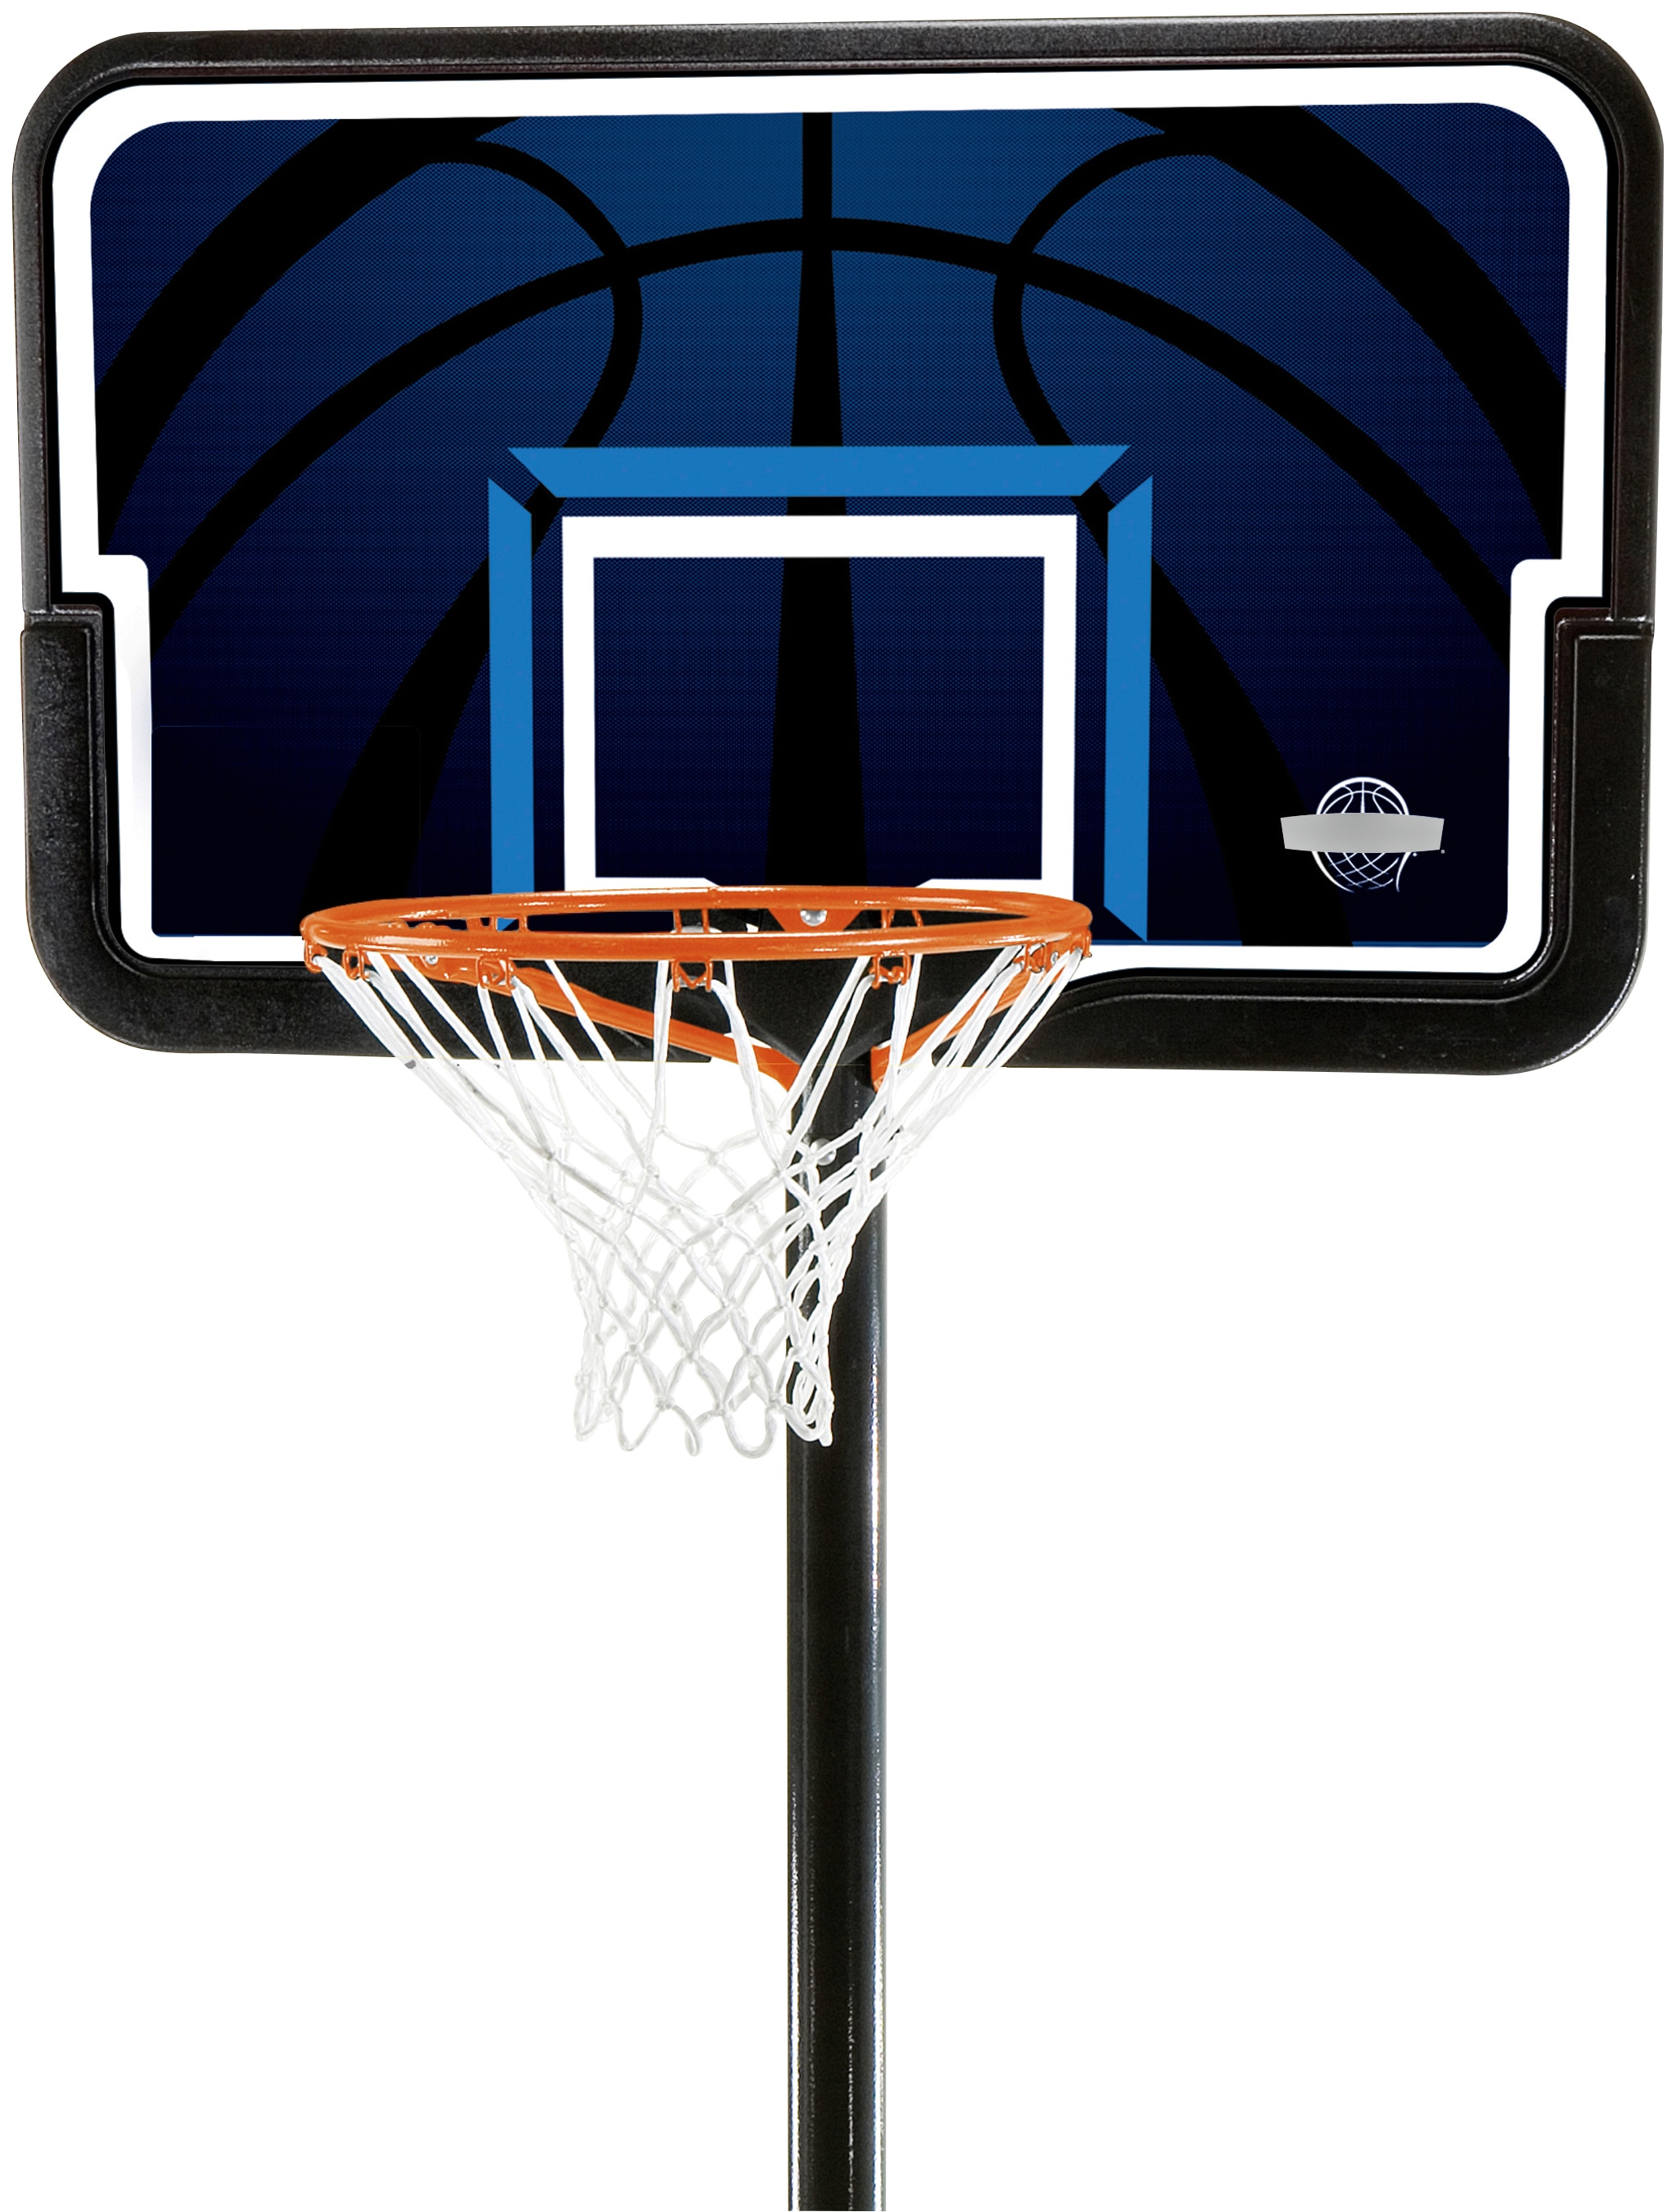 50NRTH Basketballkorb »Nevada«, höhenverstellbar schwarz/blau | BAUR